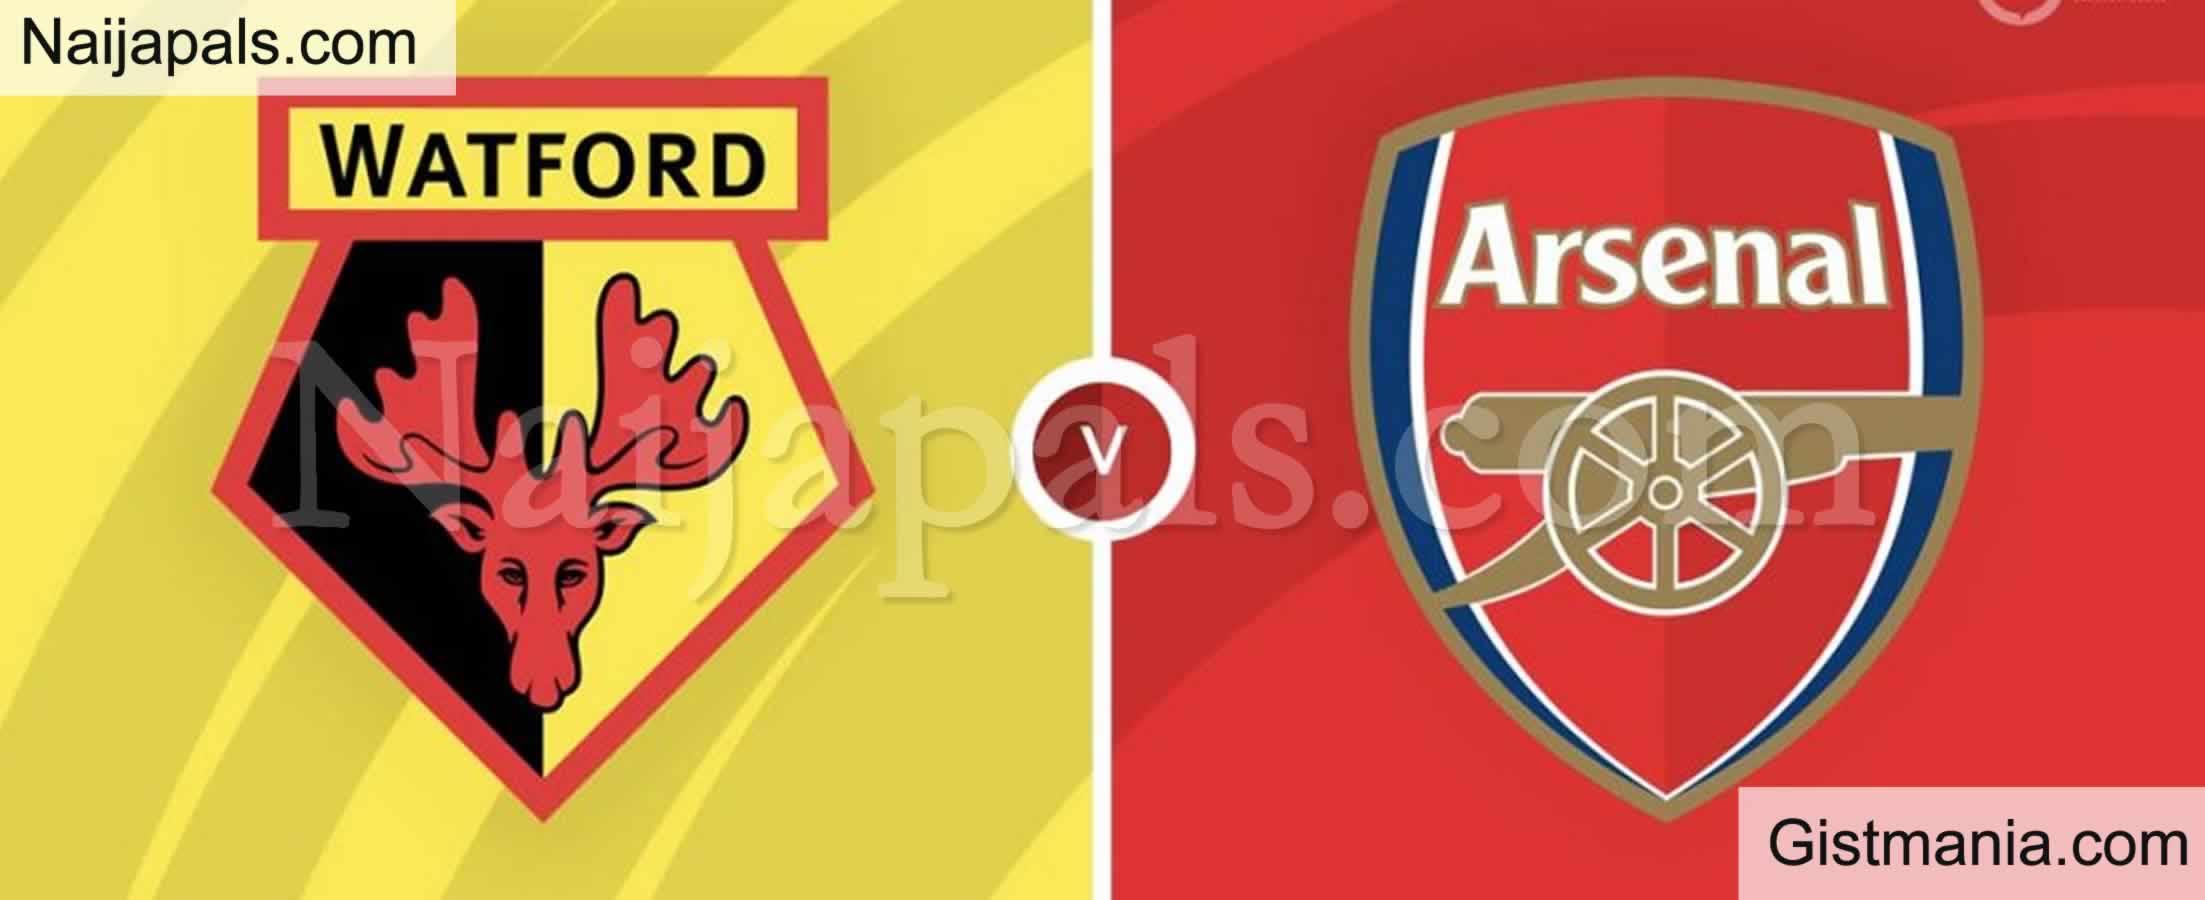 Watford v Arsenal English Premier League Match,Team News,Goal Scorers and Stats